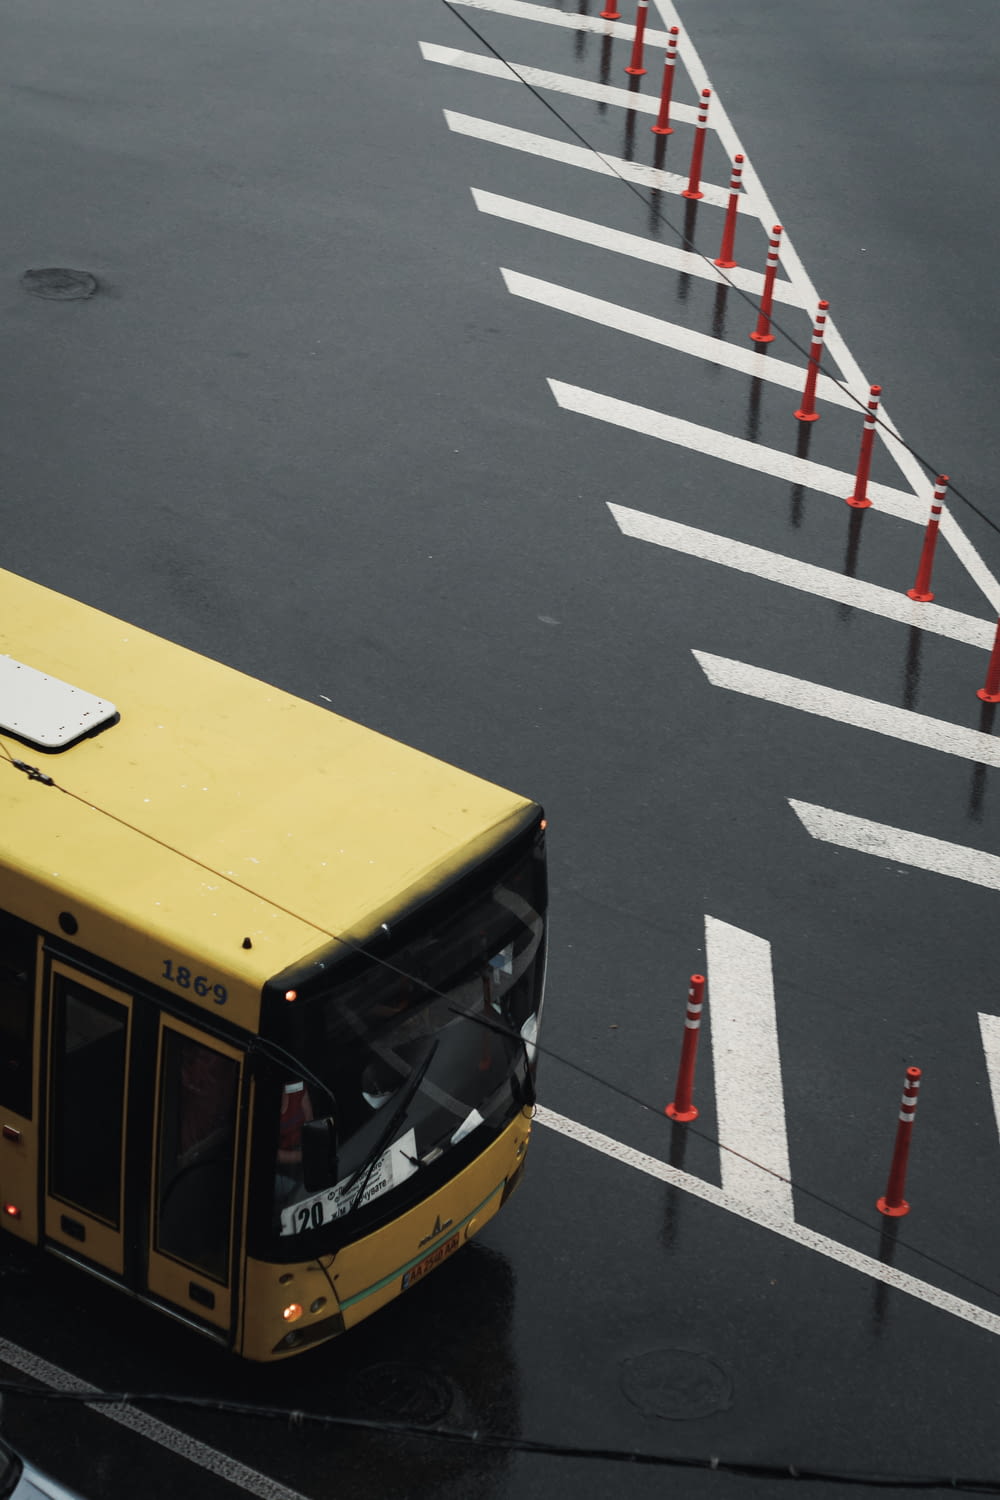 yellow bus on gray asphalt road during daytime